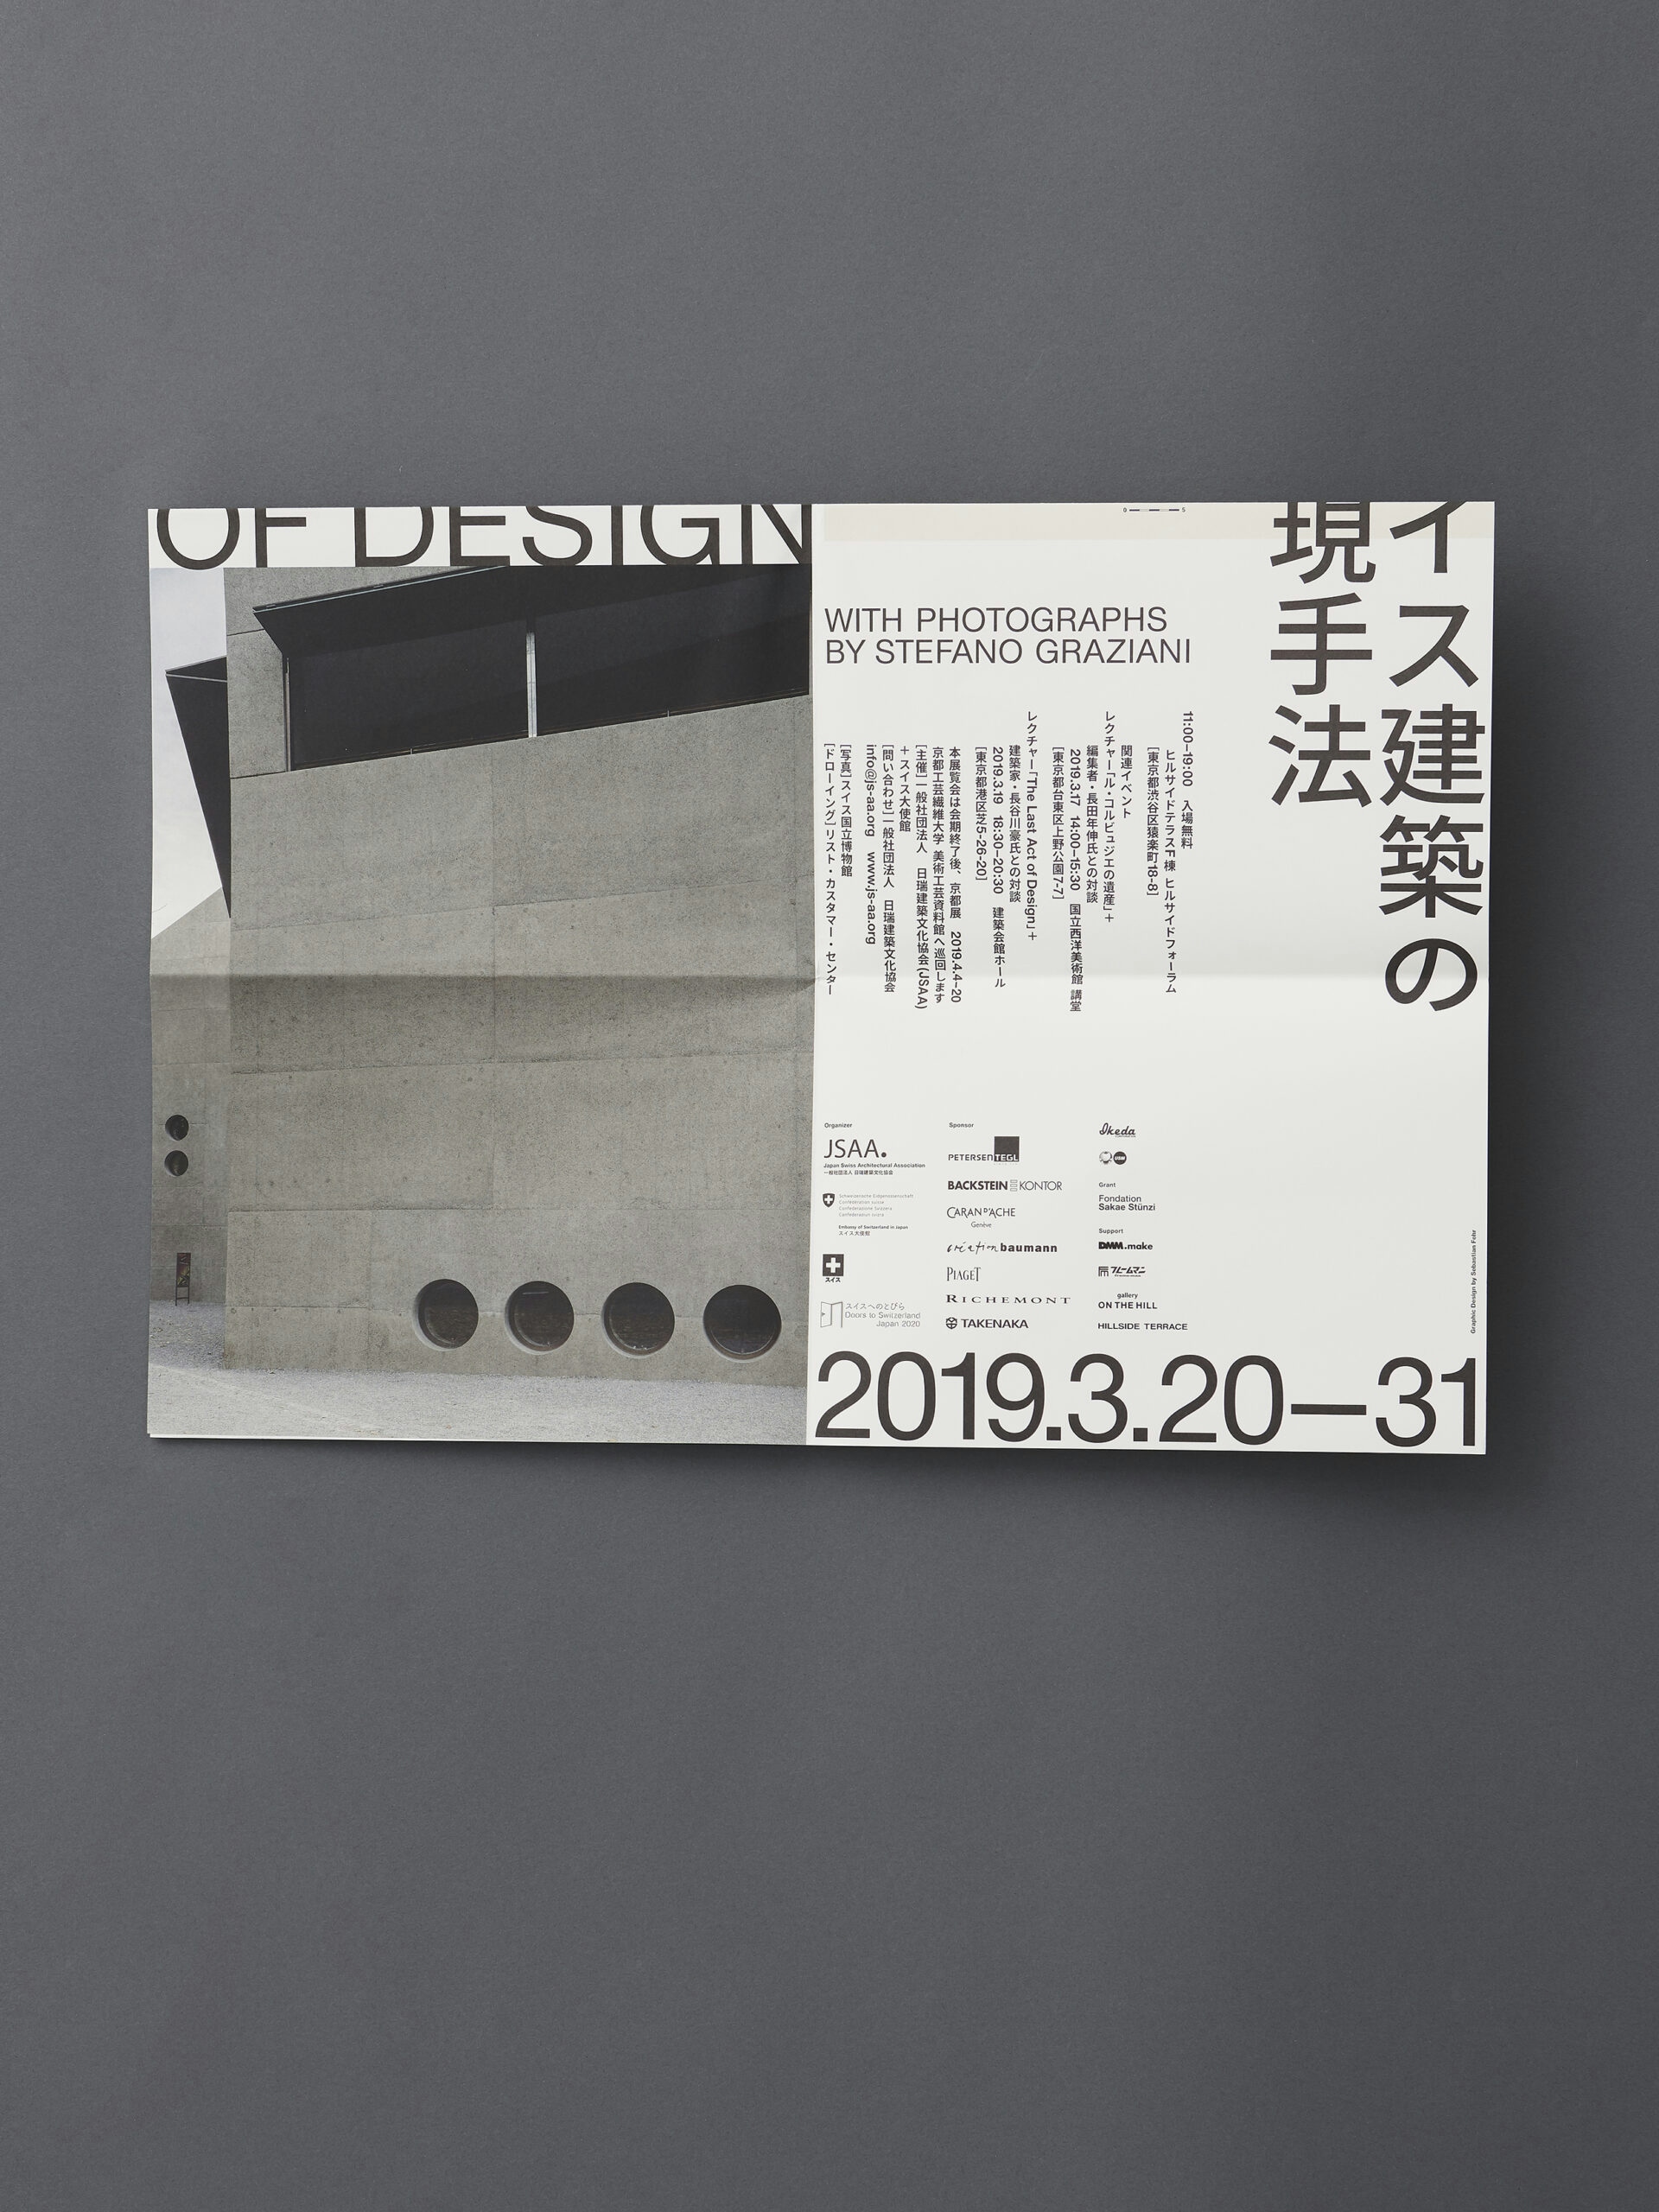 Christ & Gantenbein – The Last Act of Design folded poster